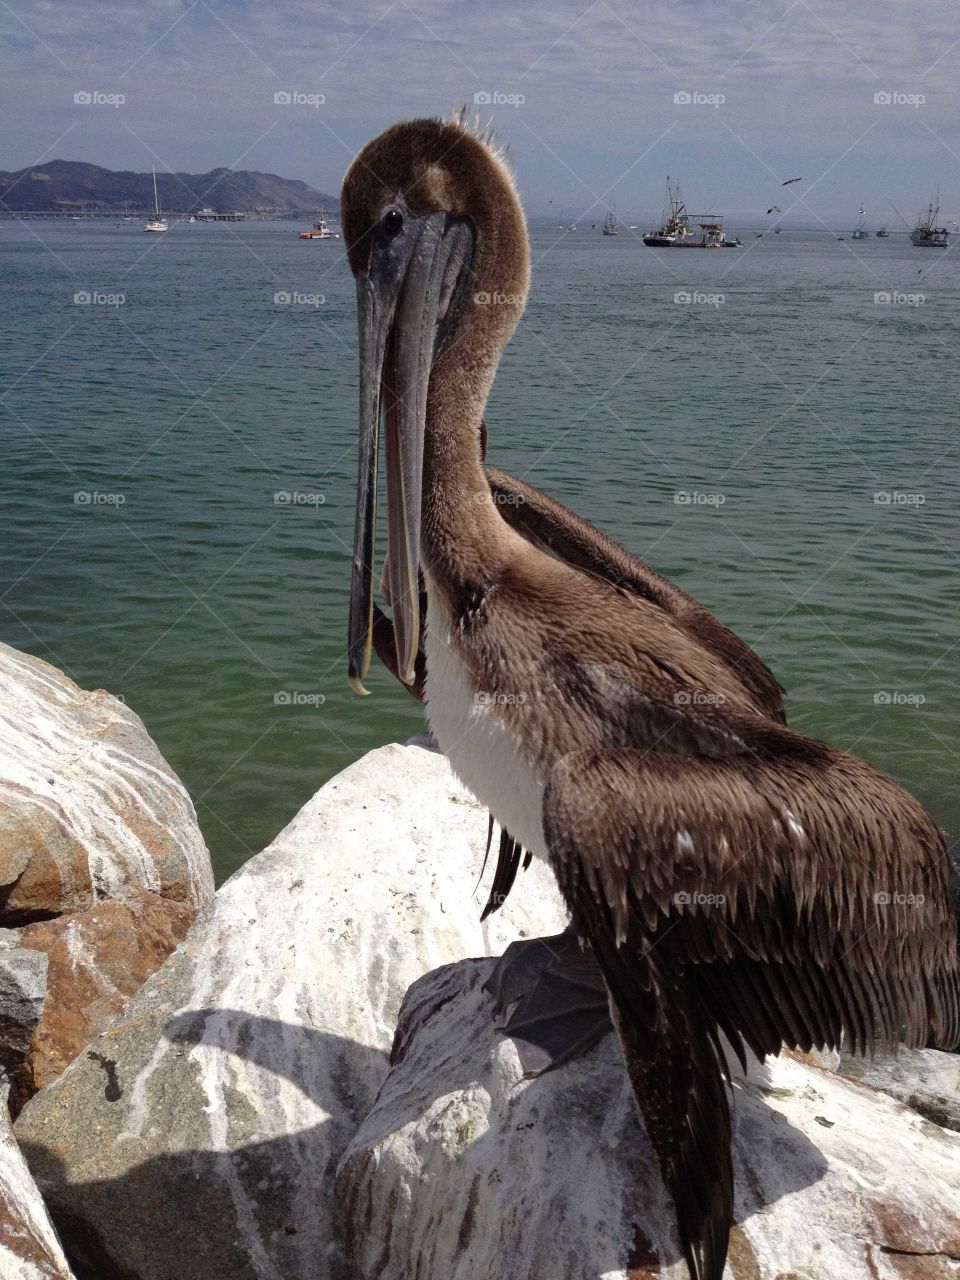 Pelican sitting on rocks